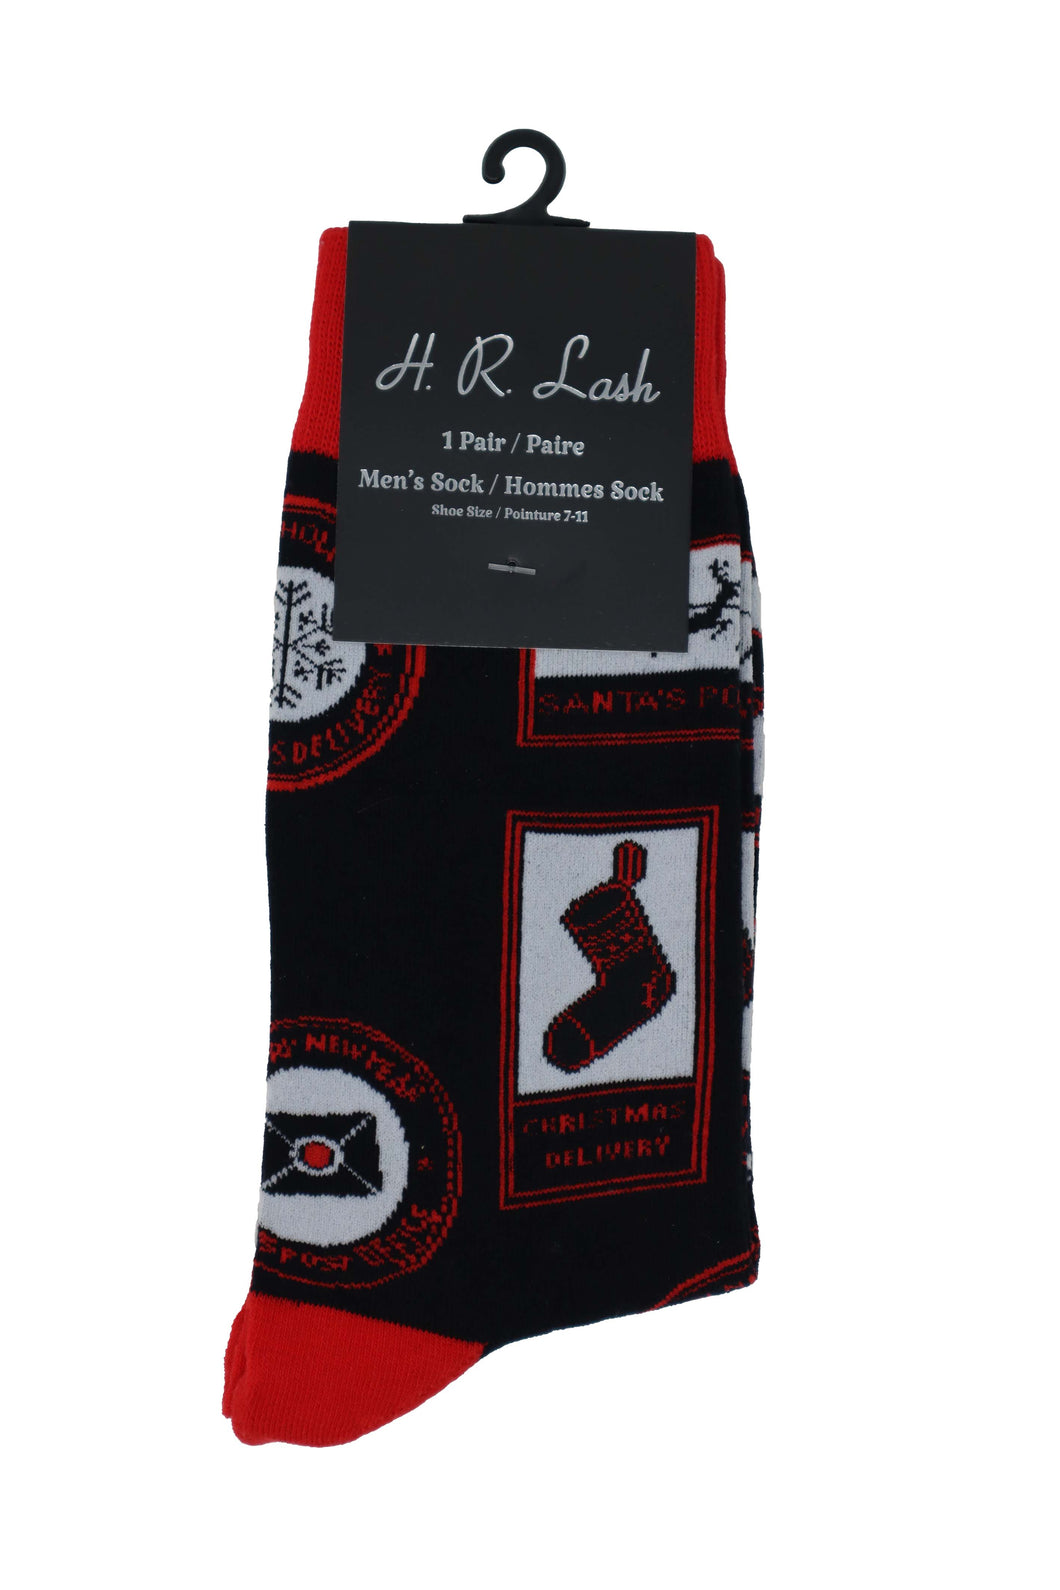 H. R. Lash | FS219 | Fun Socks | Christmas Delivery